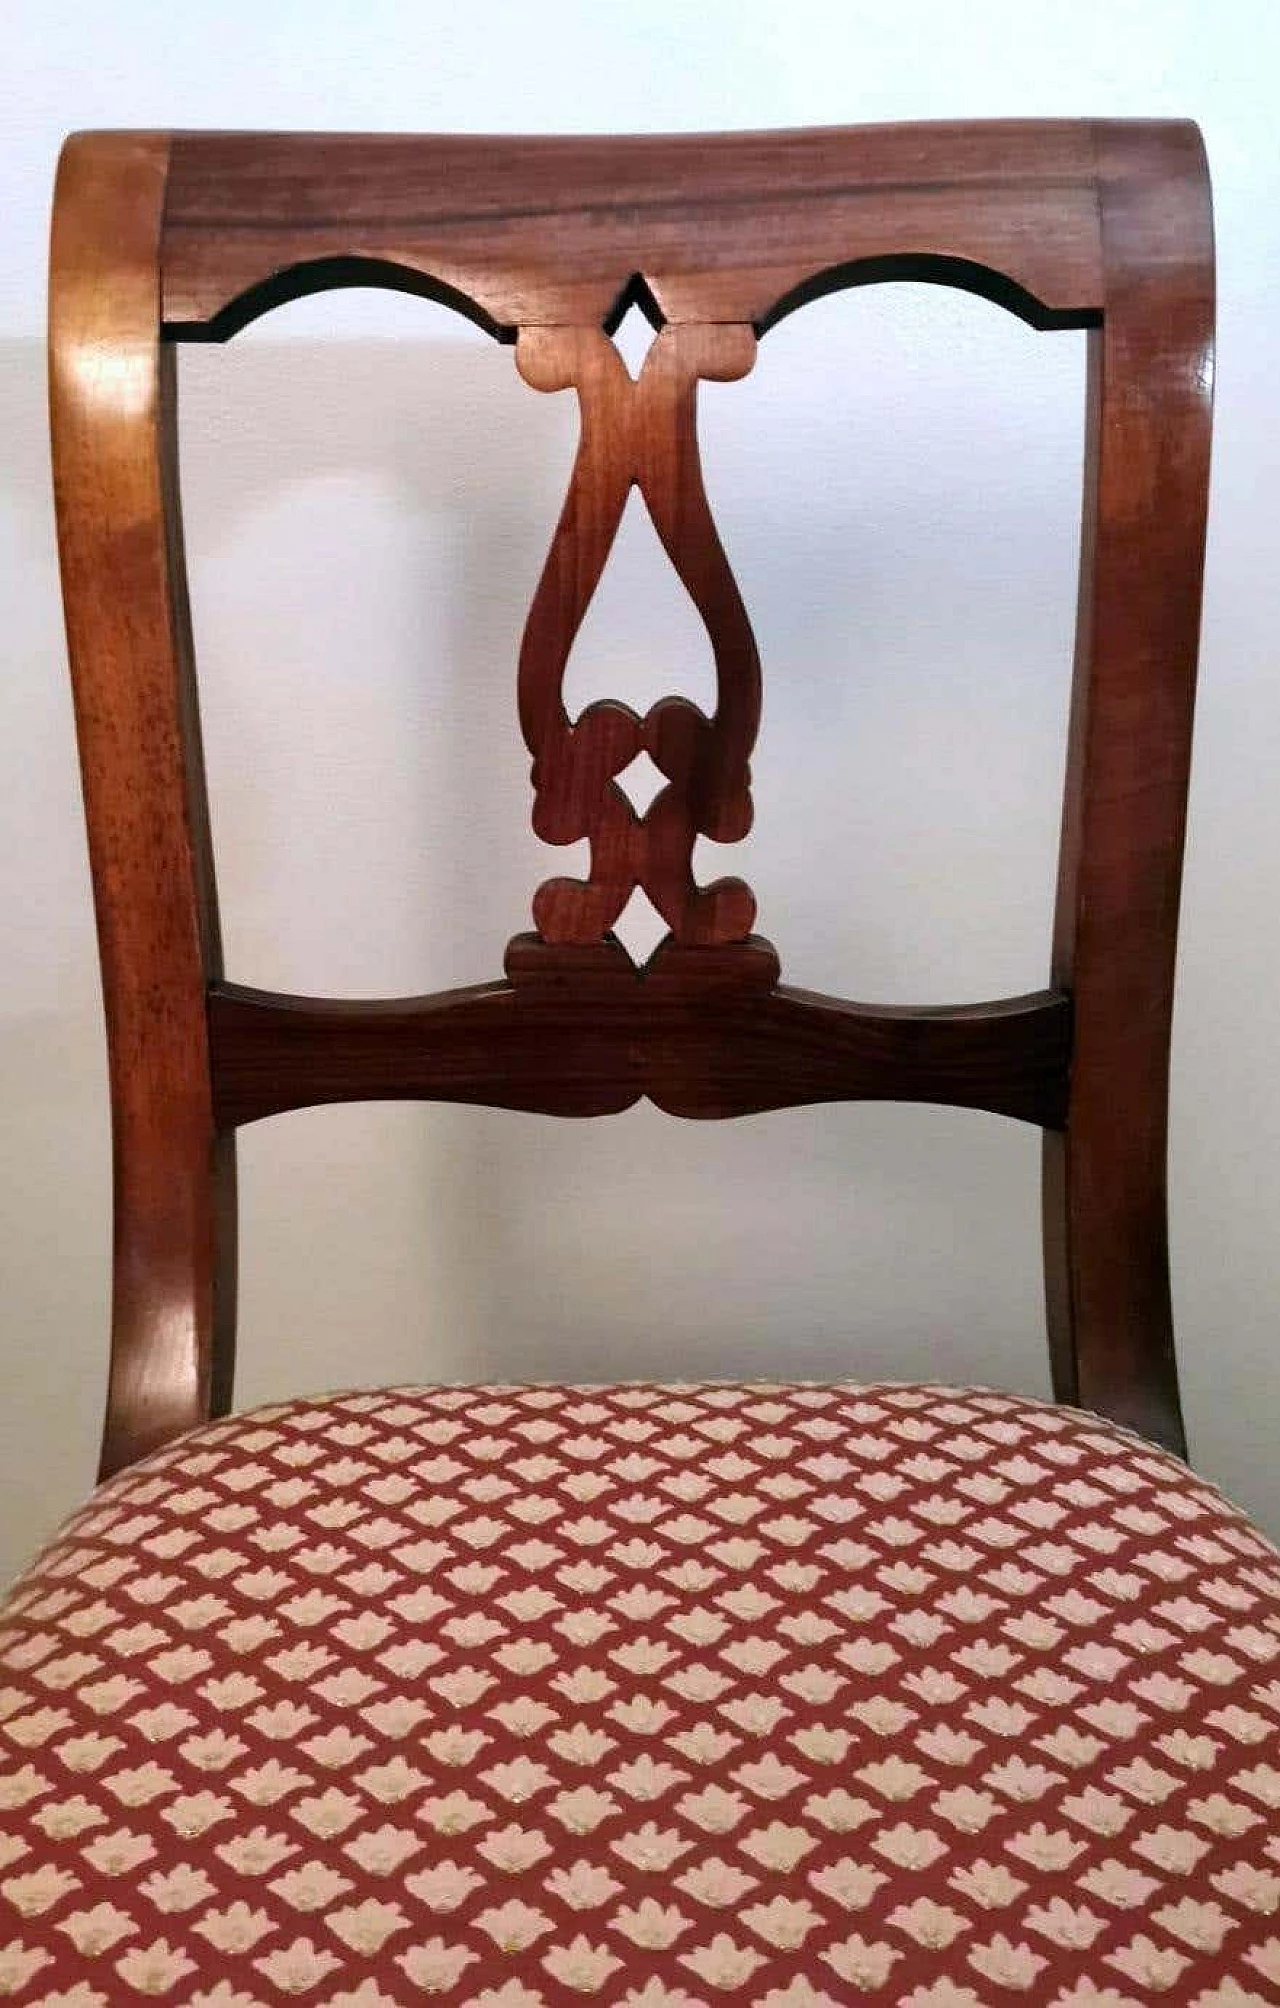 4 Sedie in legno e tessuto in stile Biedermeier, metà '800 14